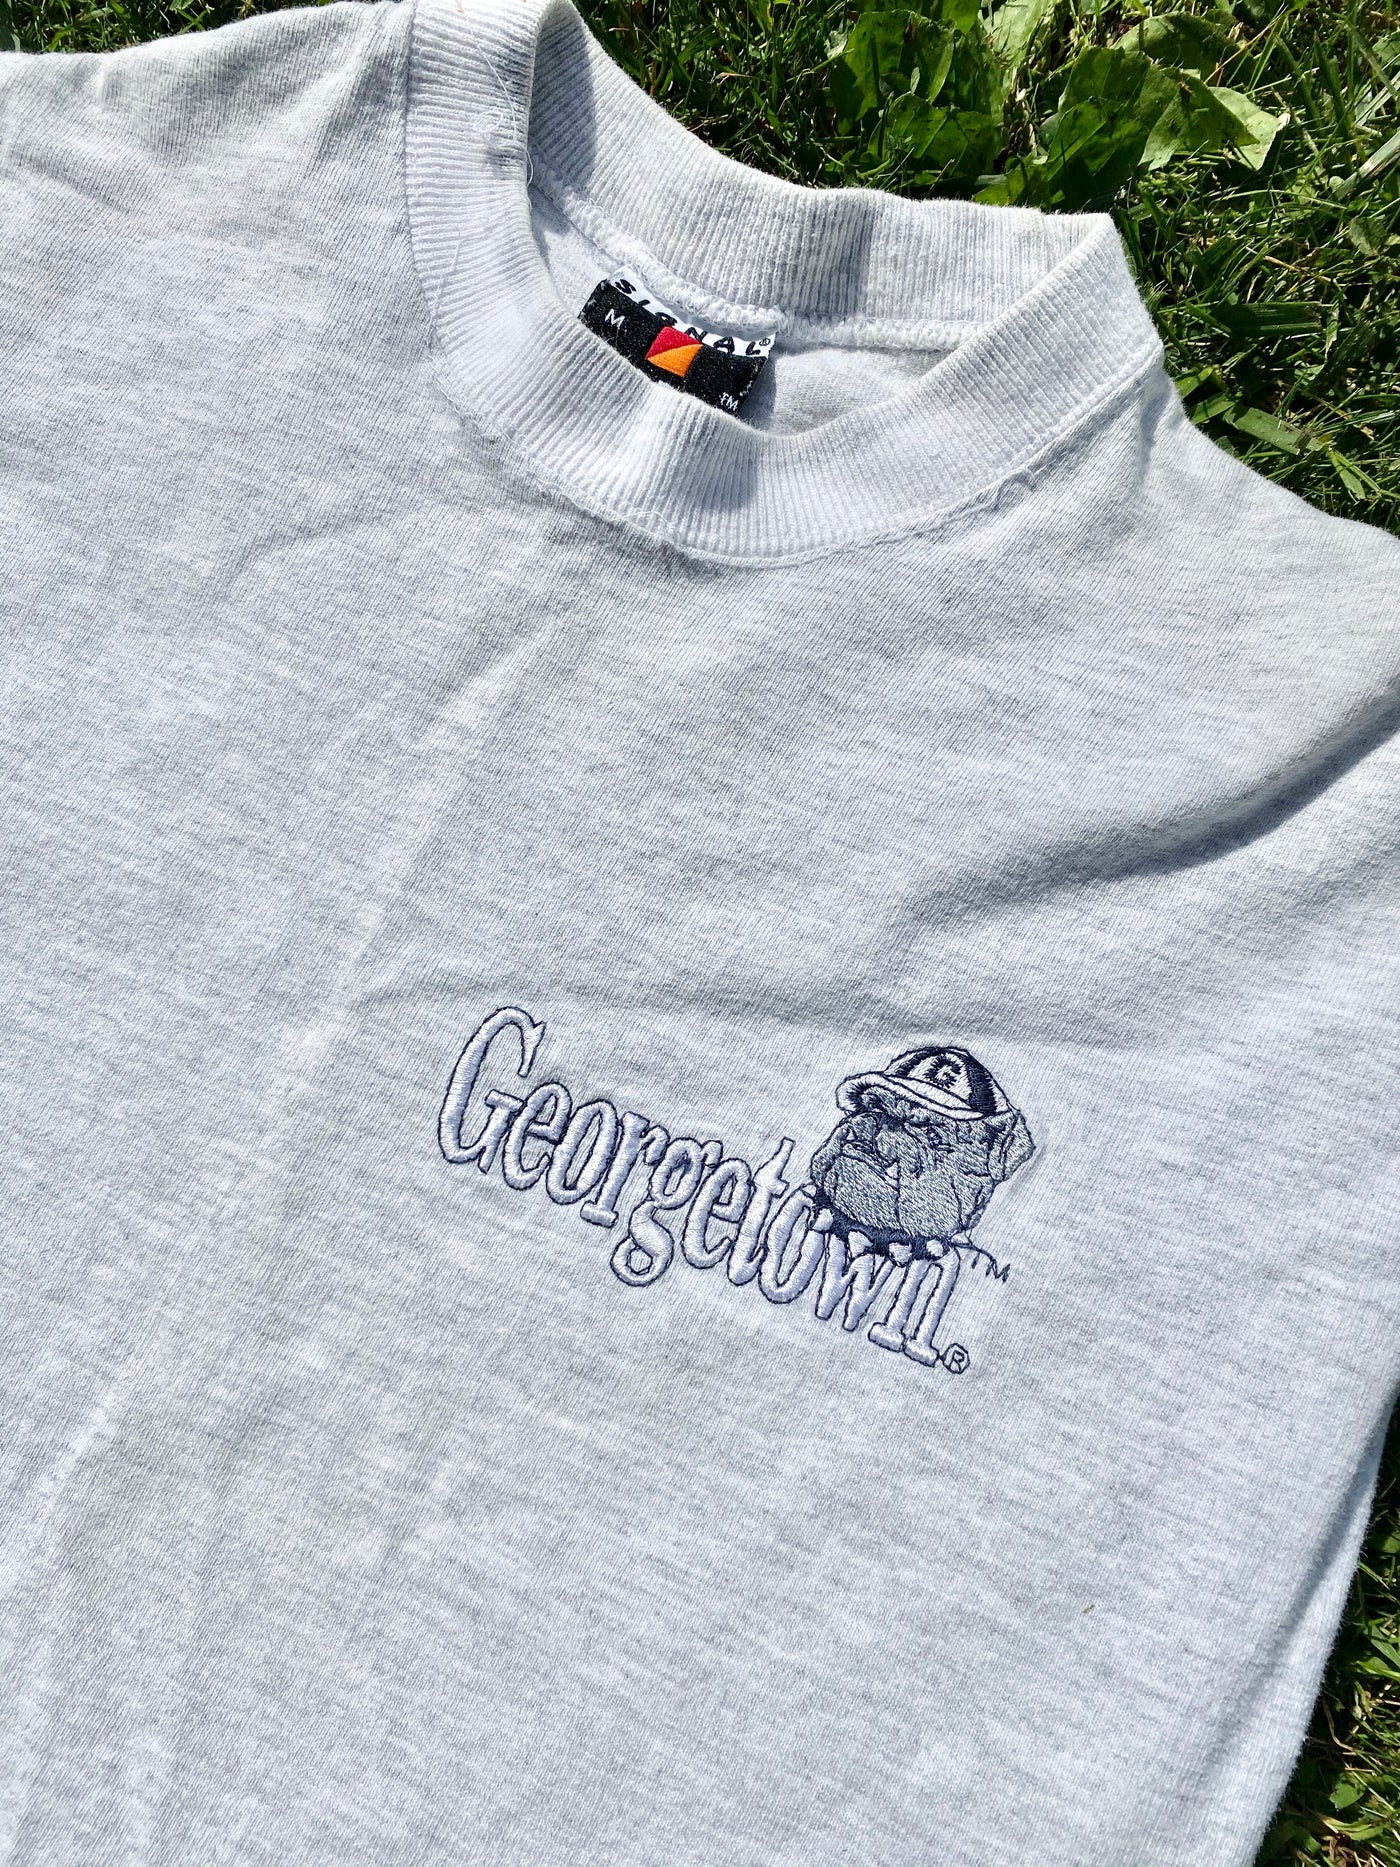 Vintage Signal Sport Georgetown T-Shirt